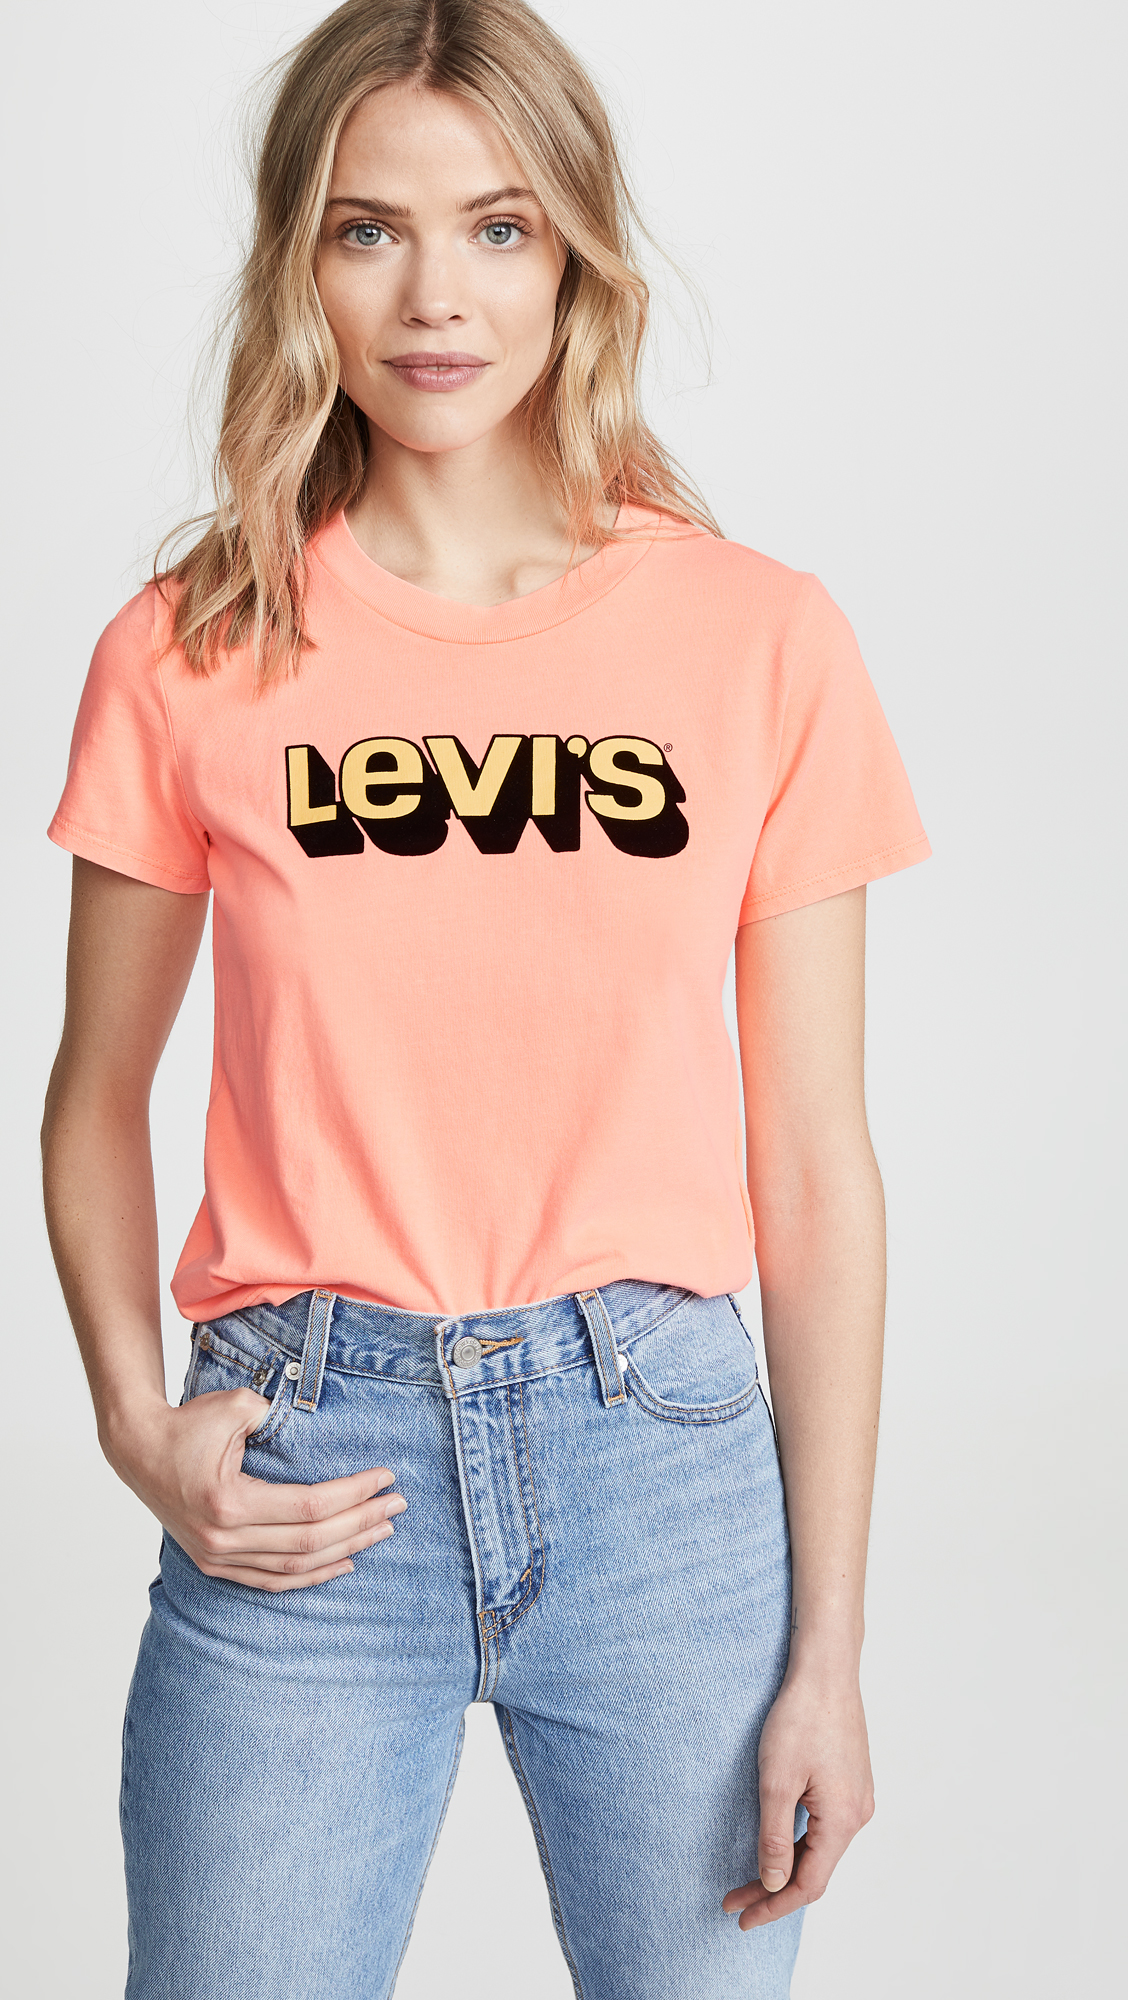 levis latest shirts